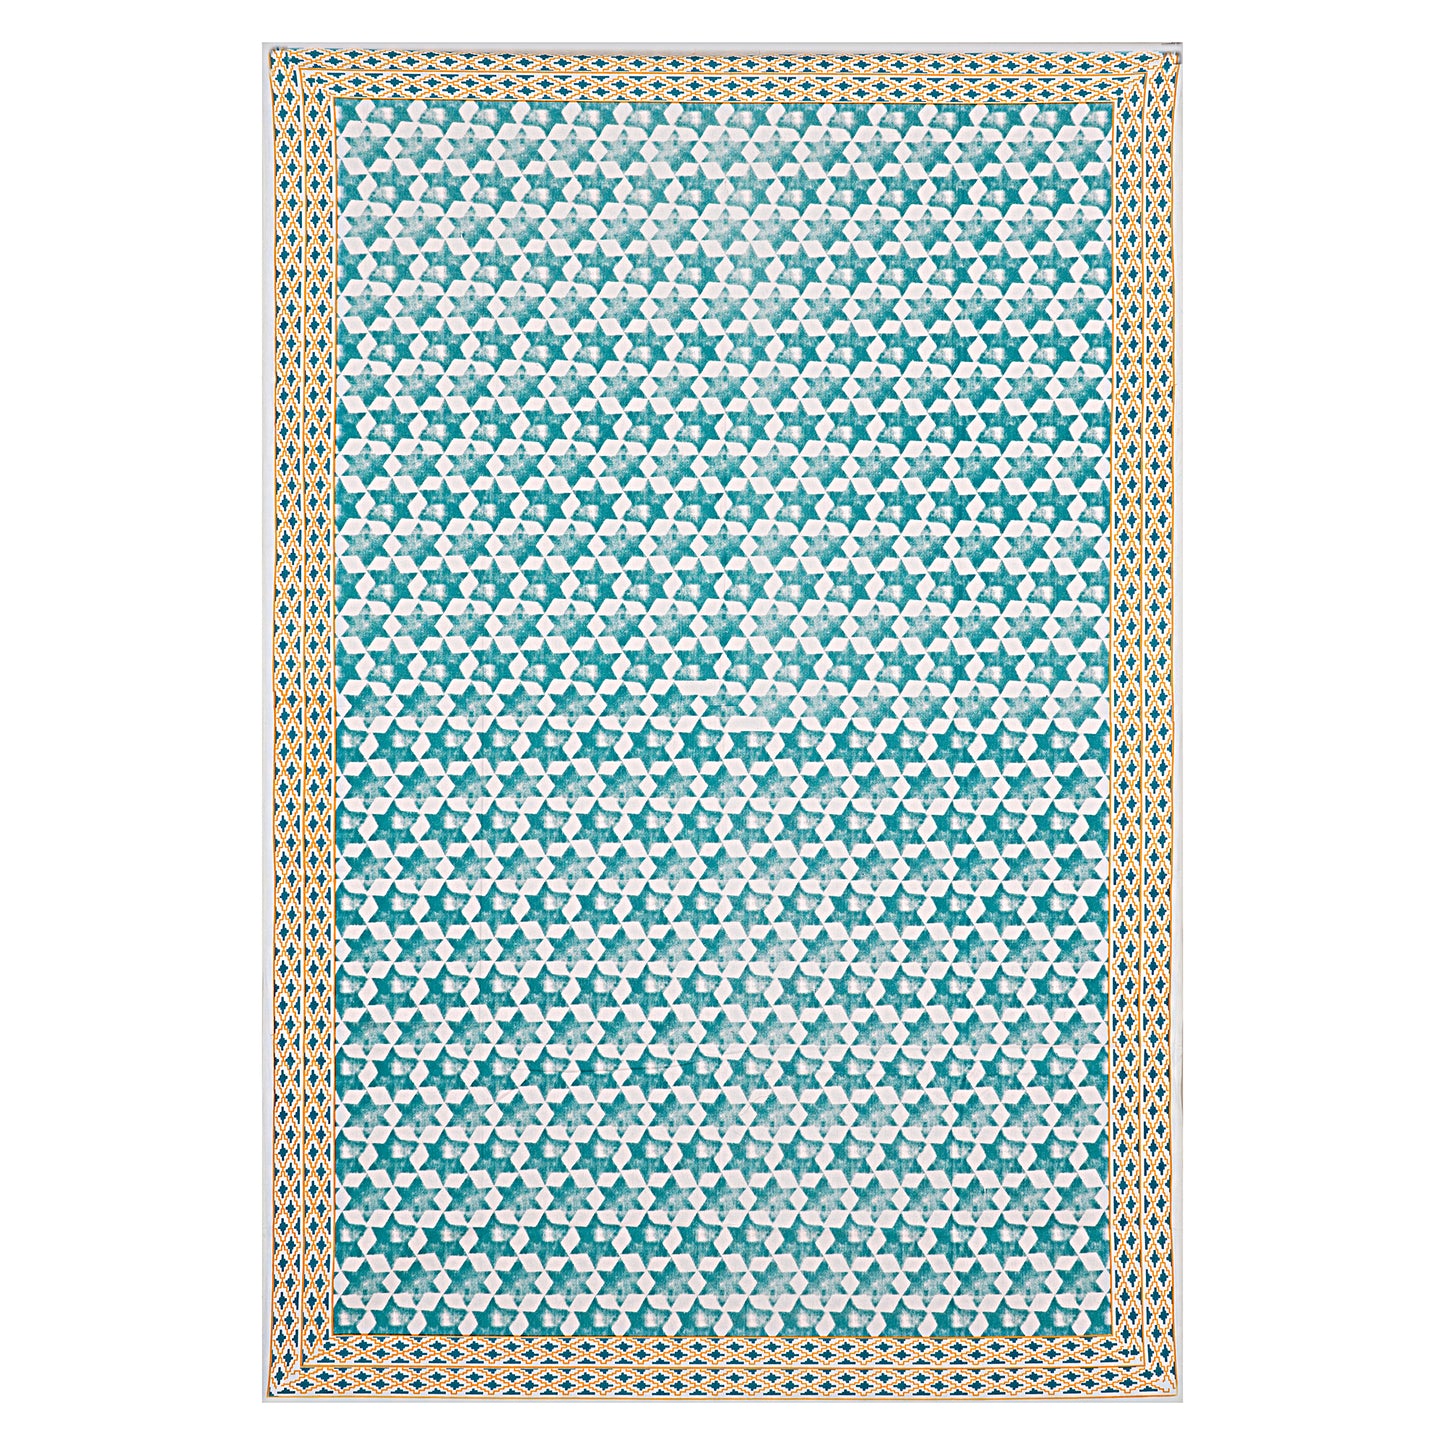 Sea Green Stars Single Bedsheet (90 x 60 Inches)